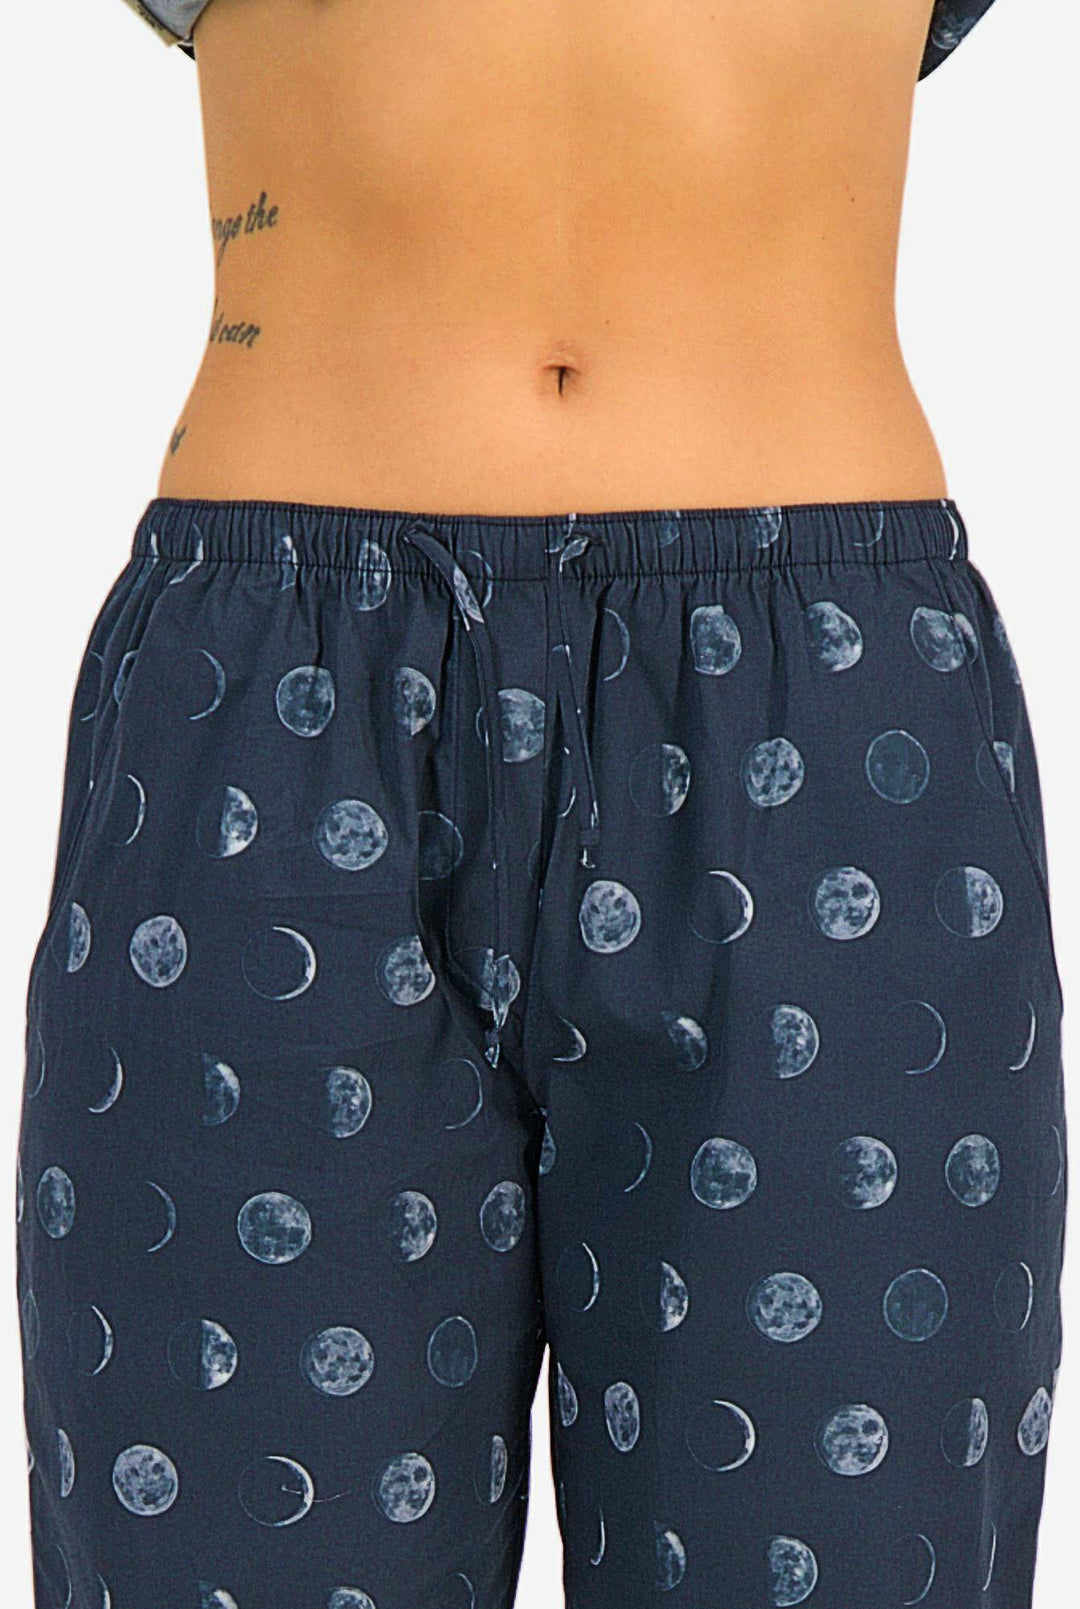 Matching Pyjamas Couple - Moons